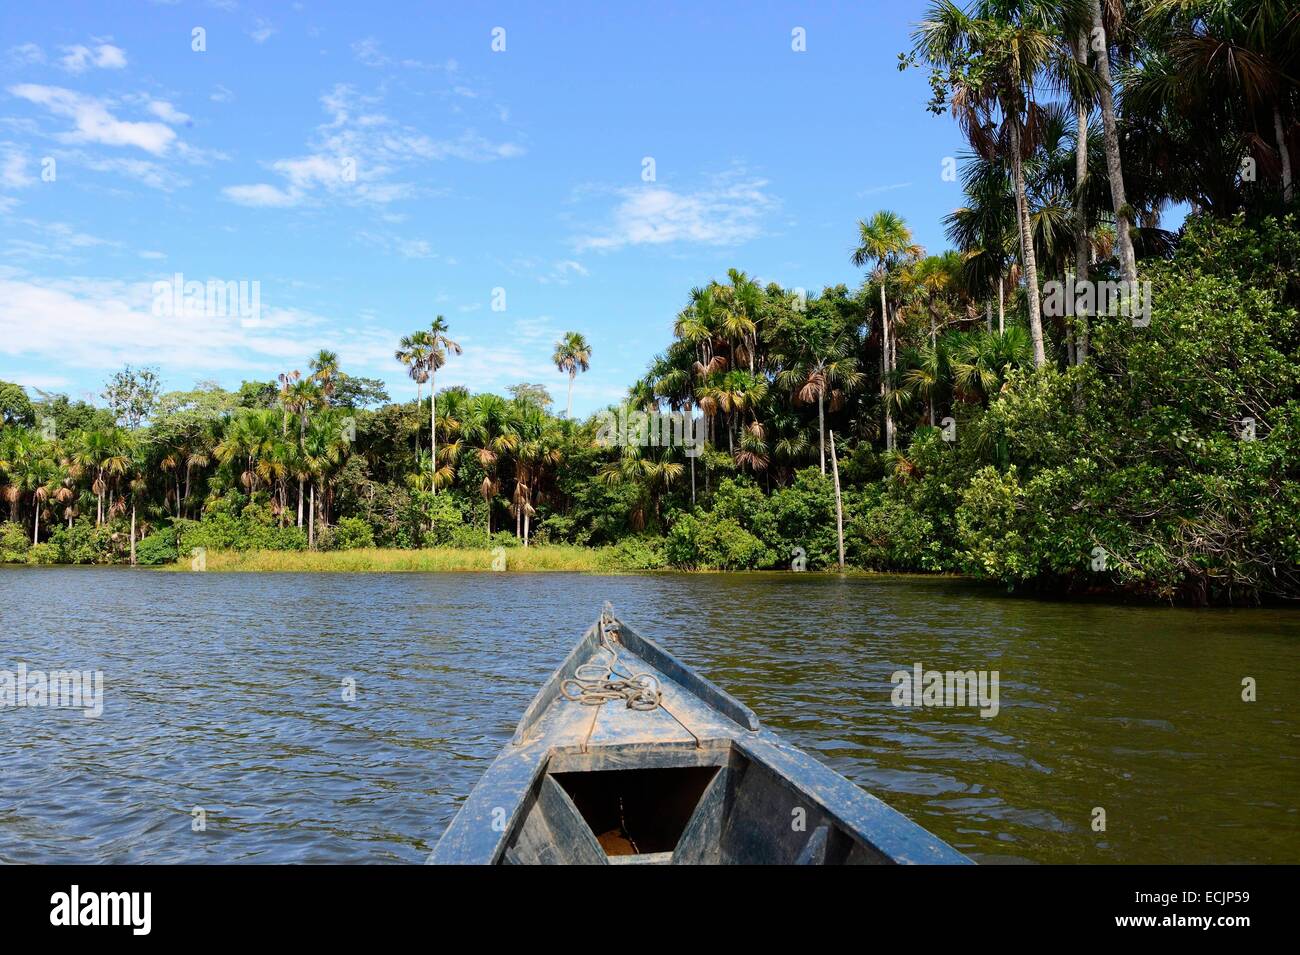 Puerto maldonado rainforest hi-res stock photography and images - Alamy